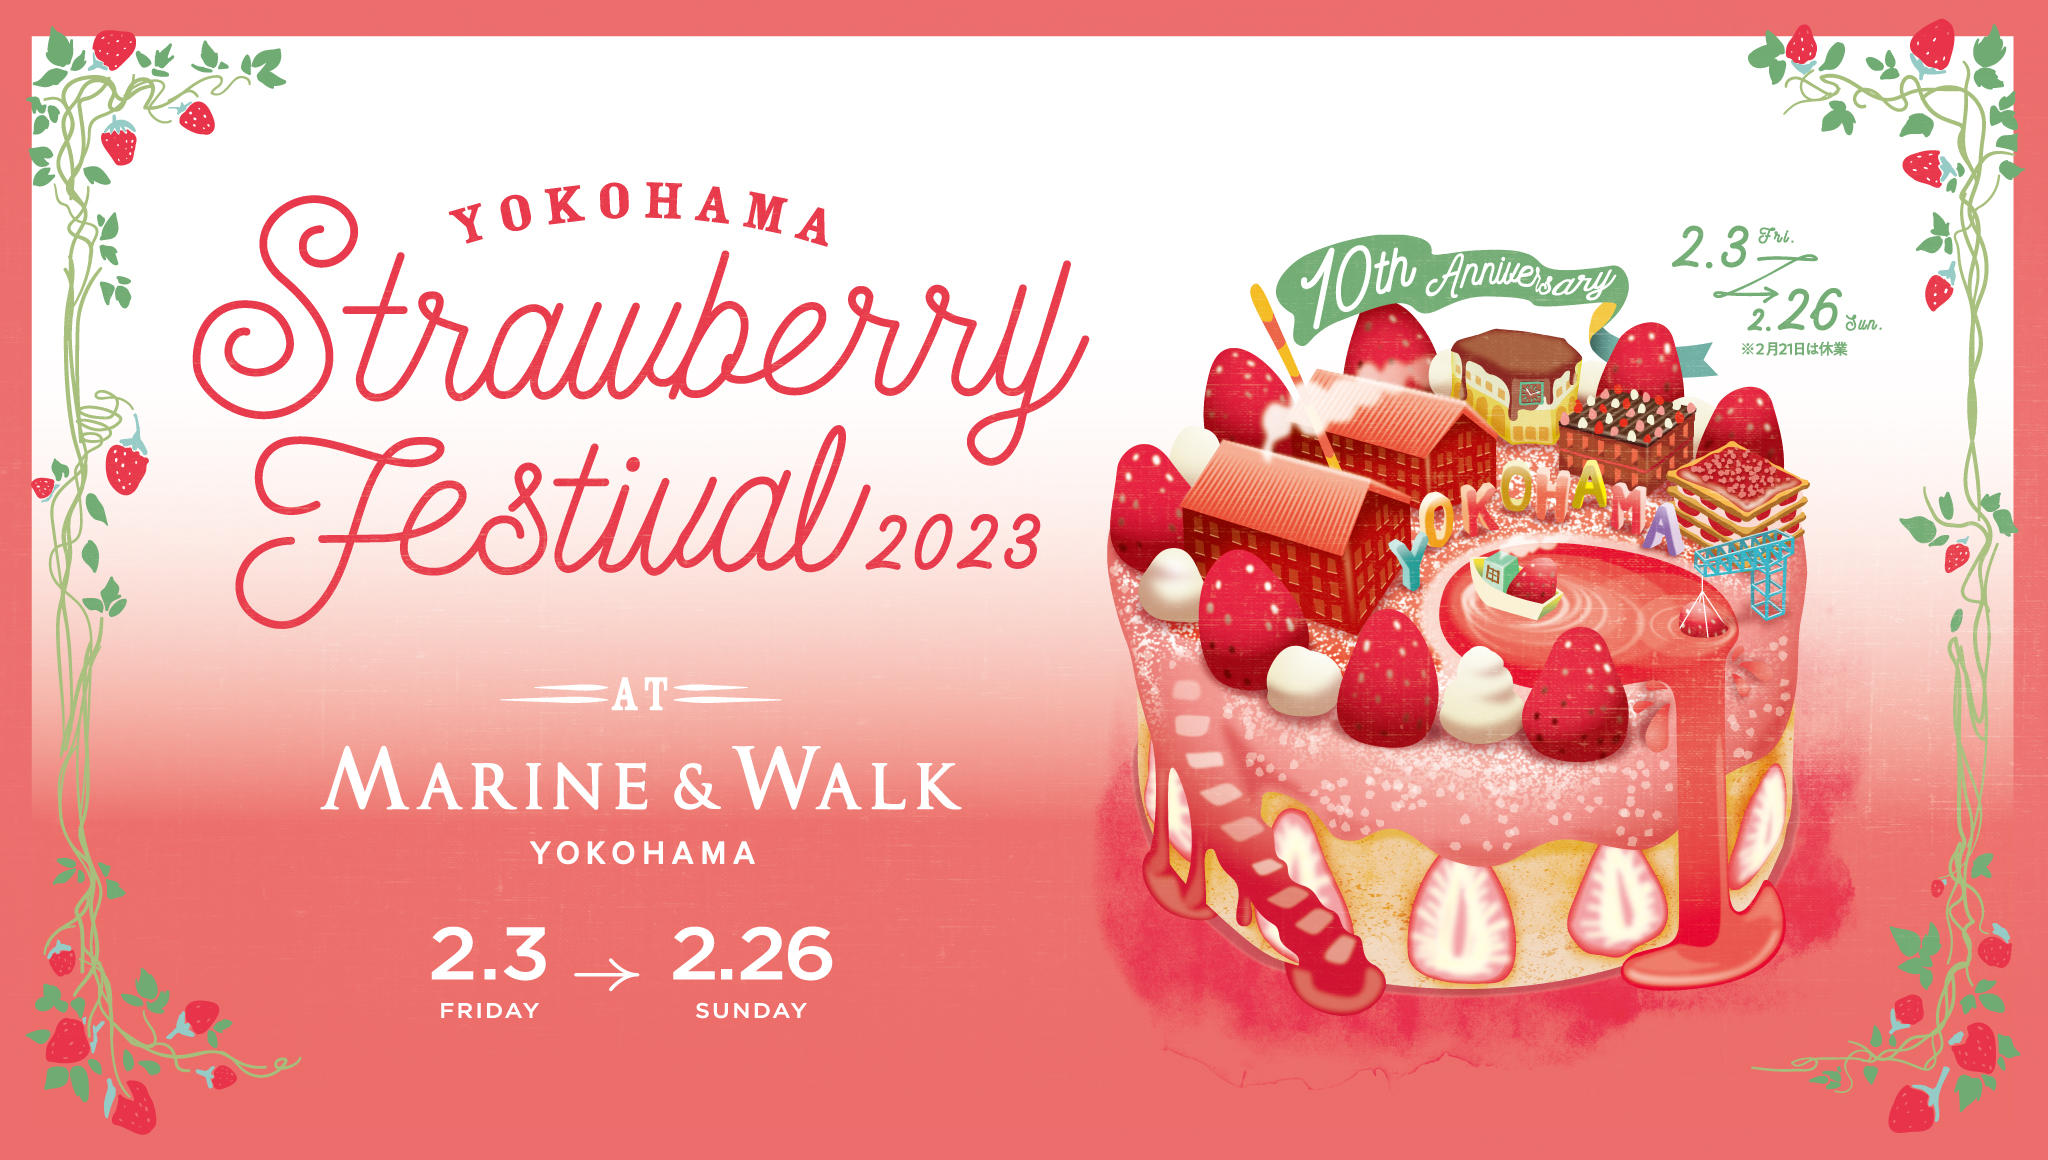 Strawberry Festival 2023　2.3 FRI - 2.26 SUN